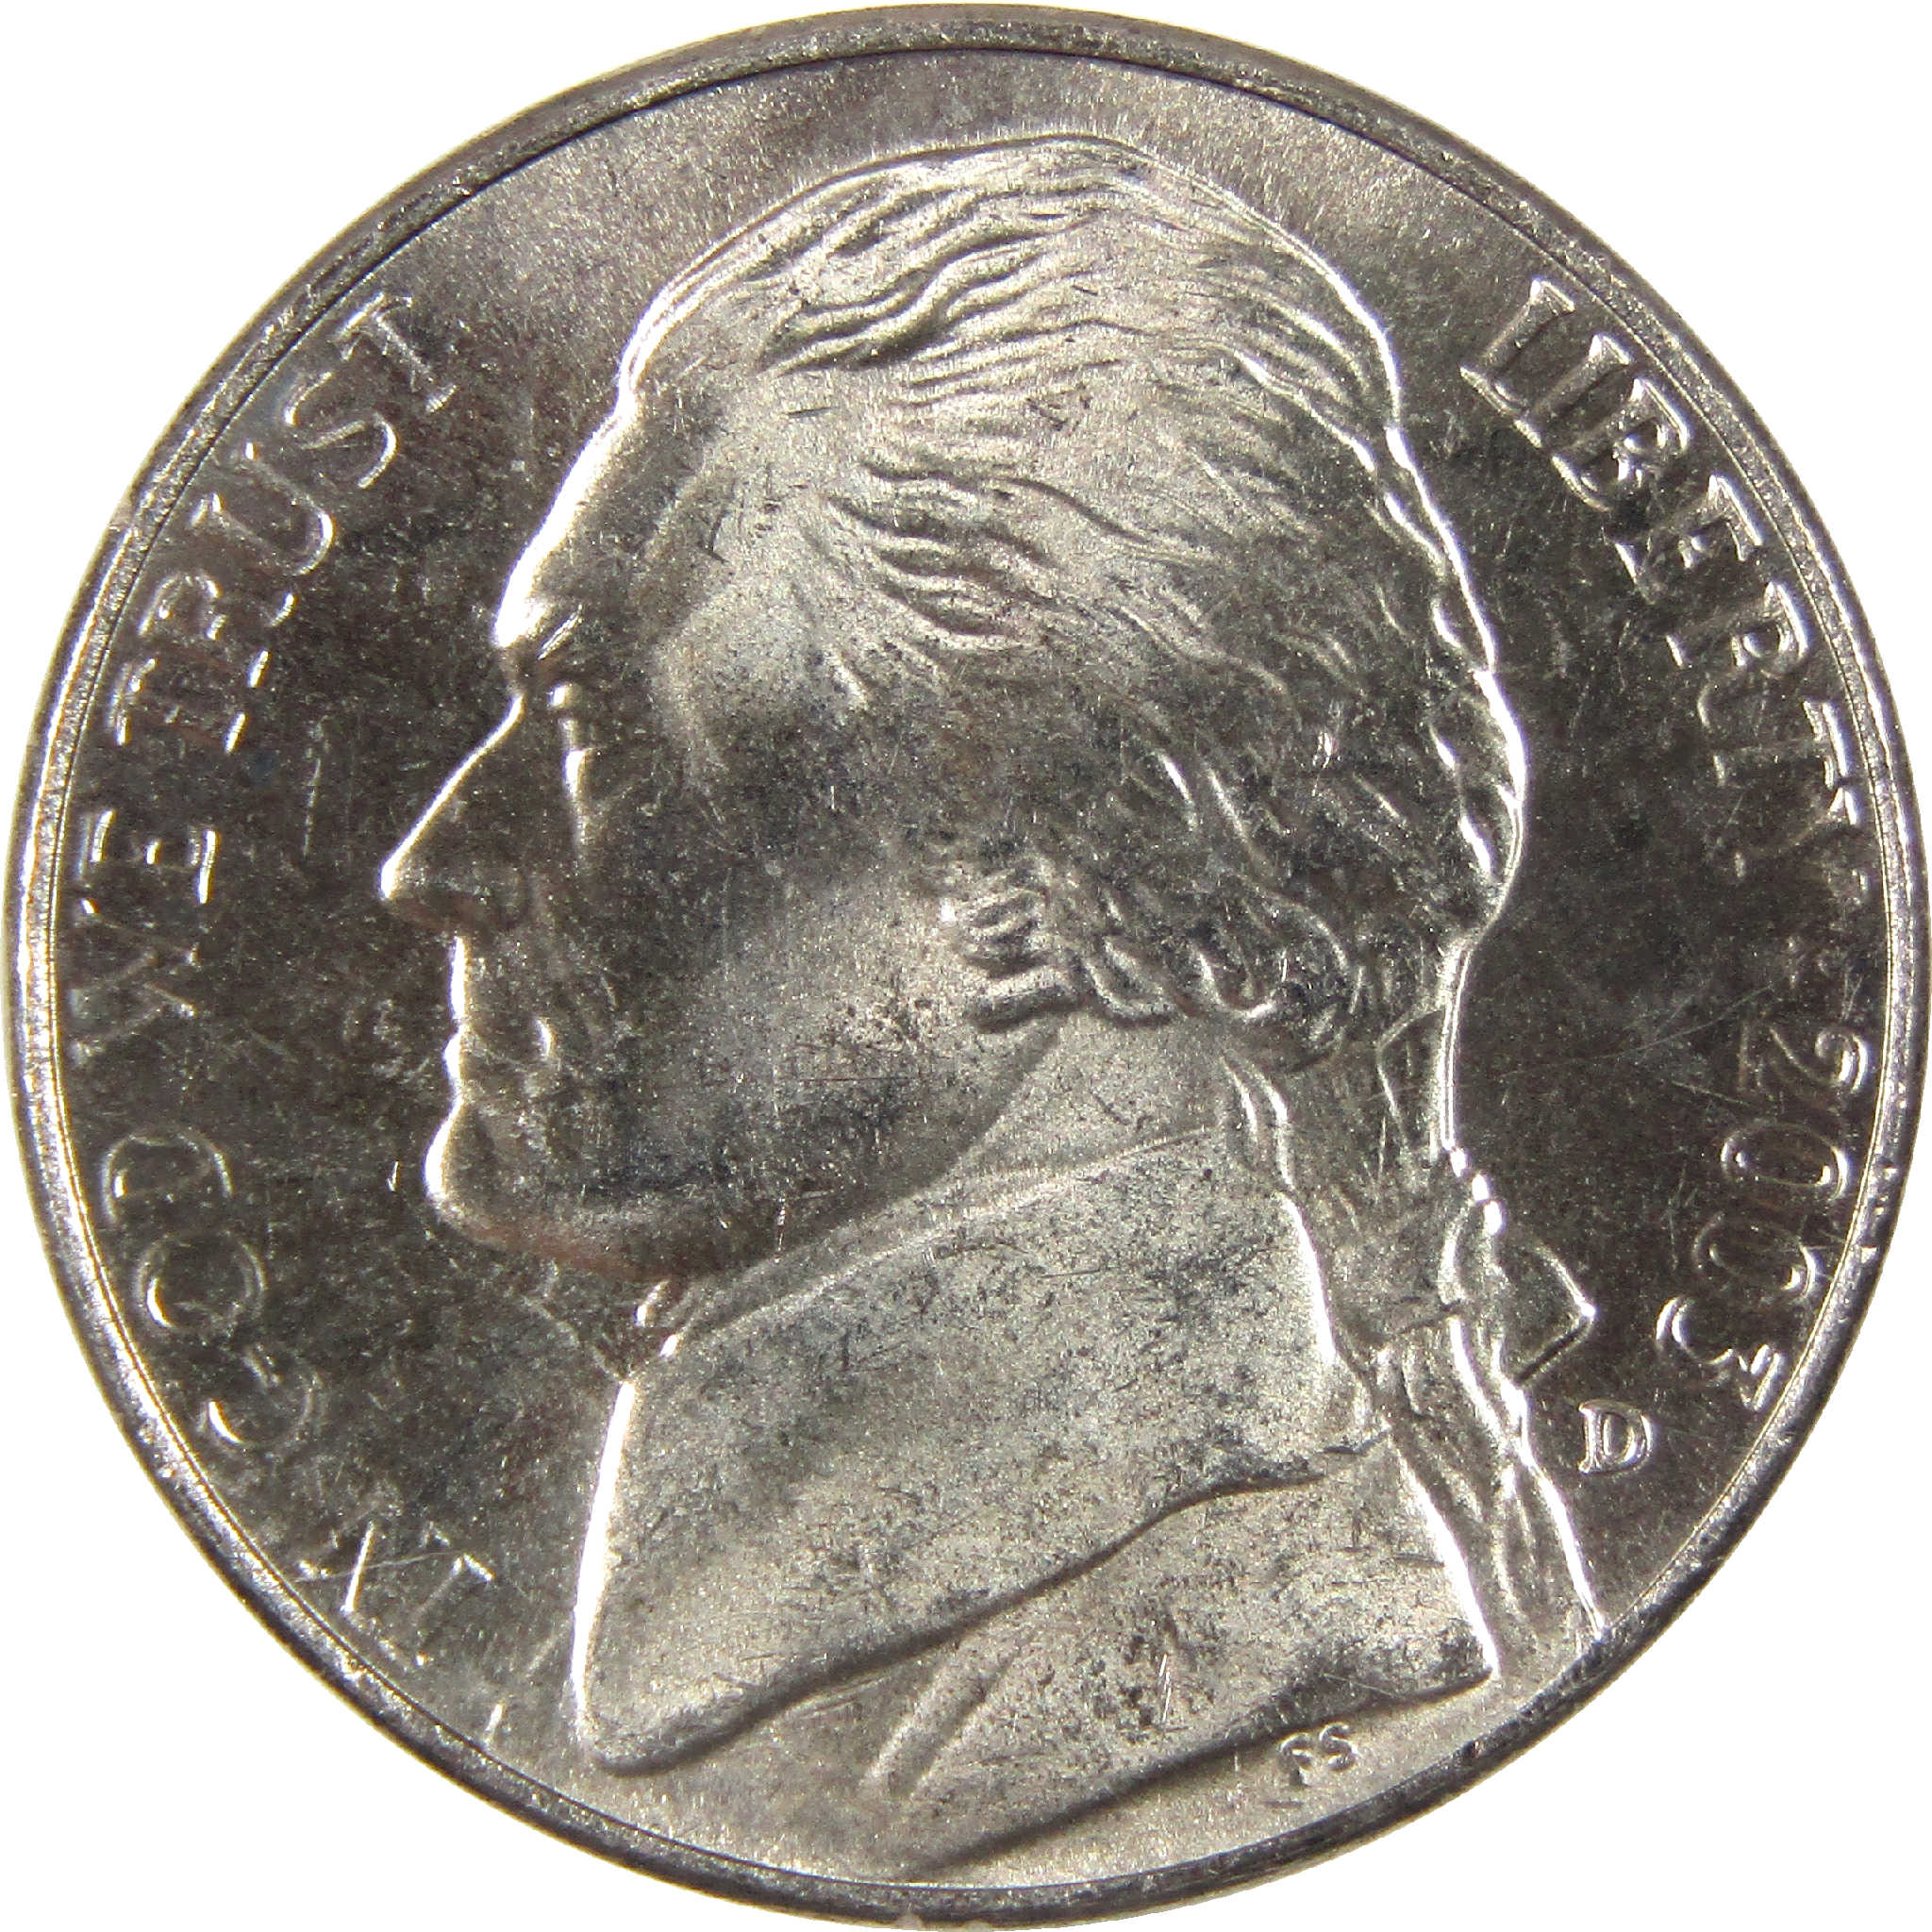 2003 D Jefferson Nickel Uncirculated 5c Coin